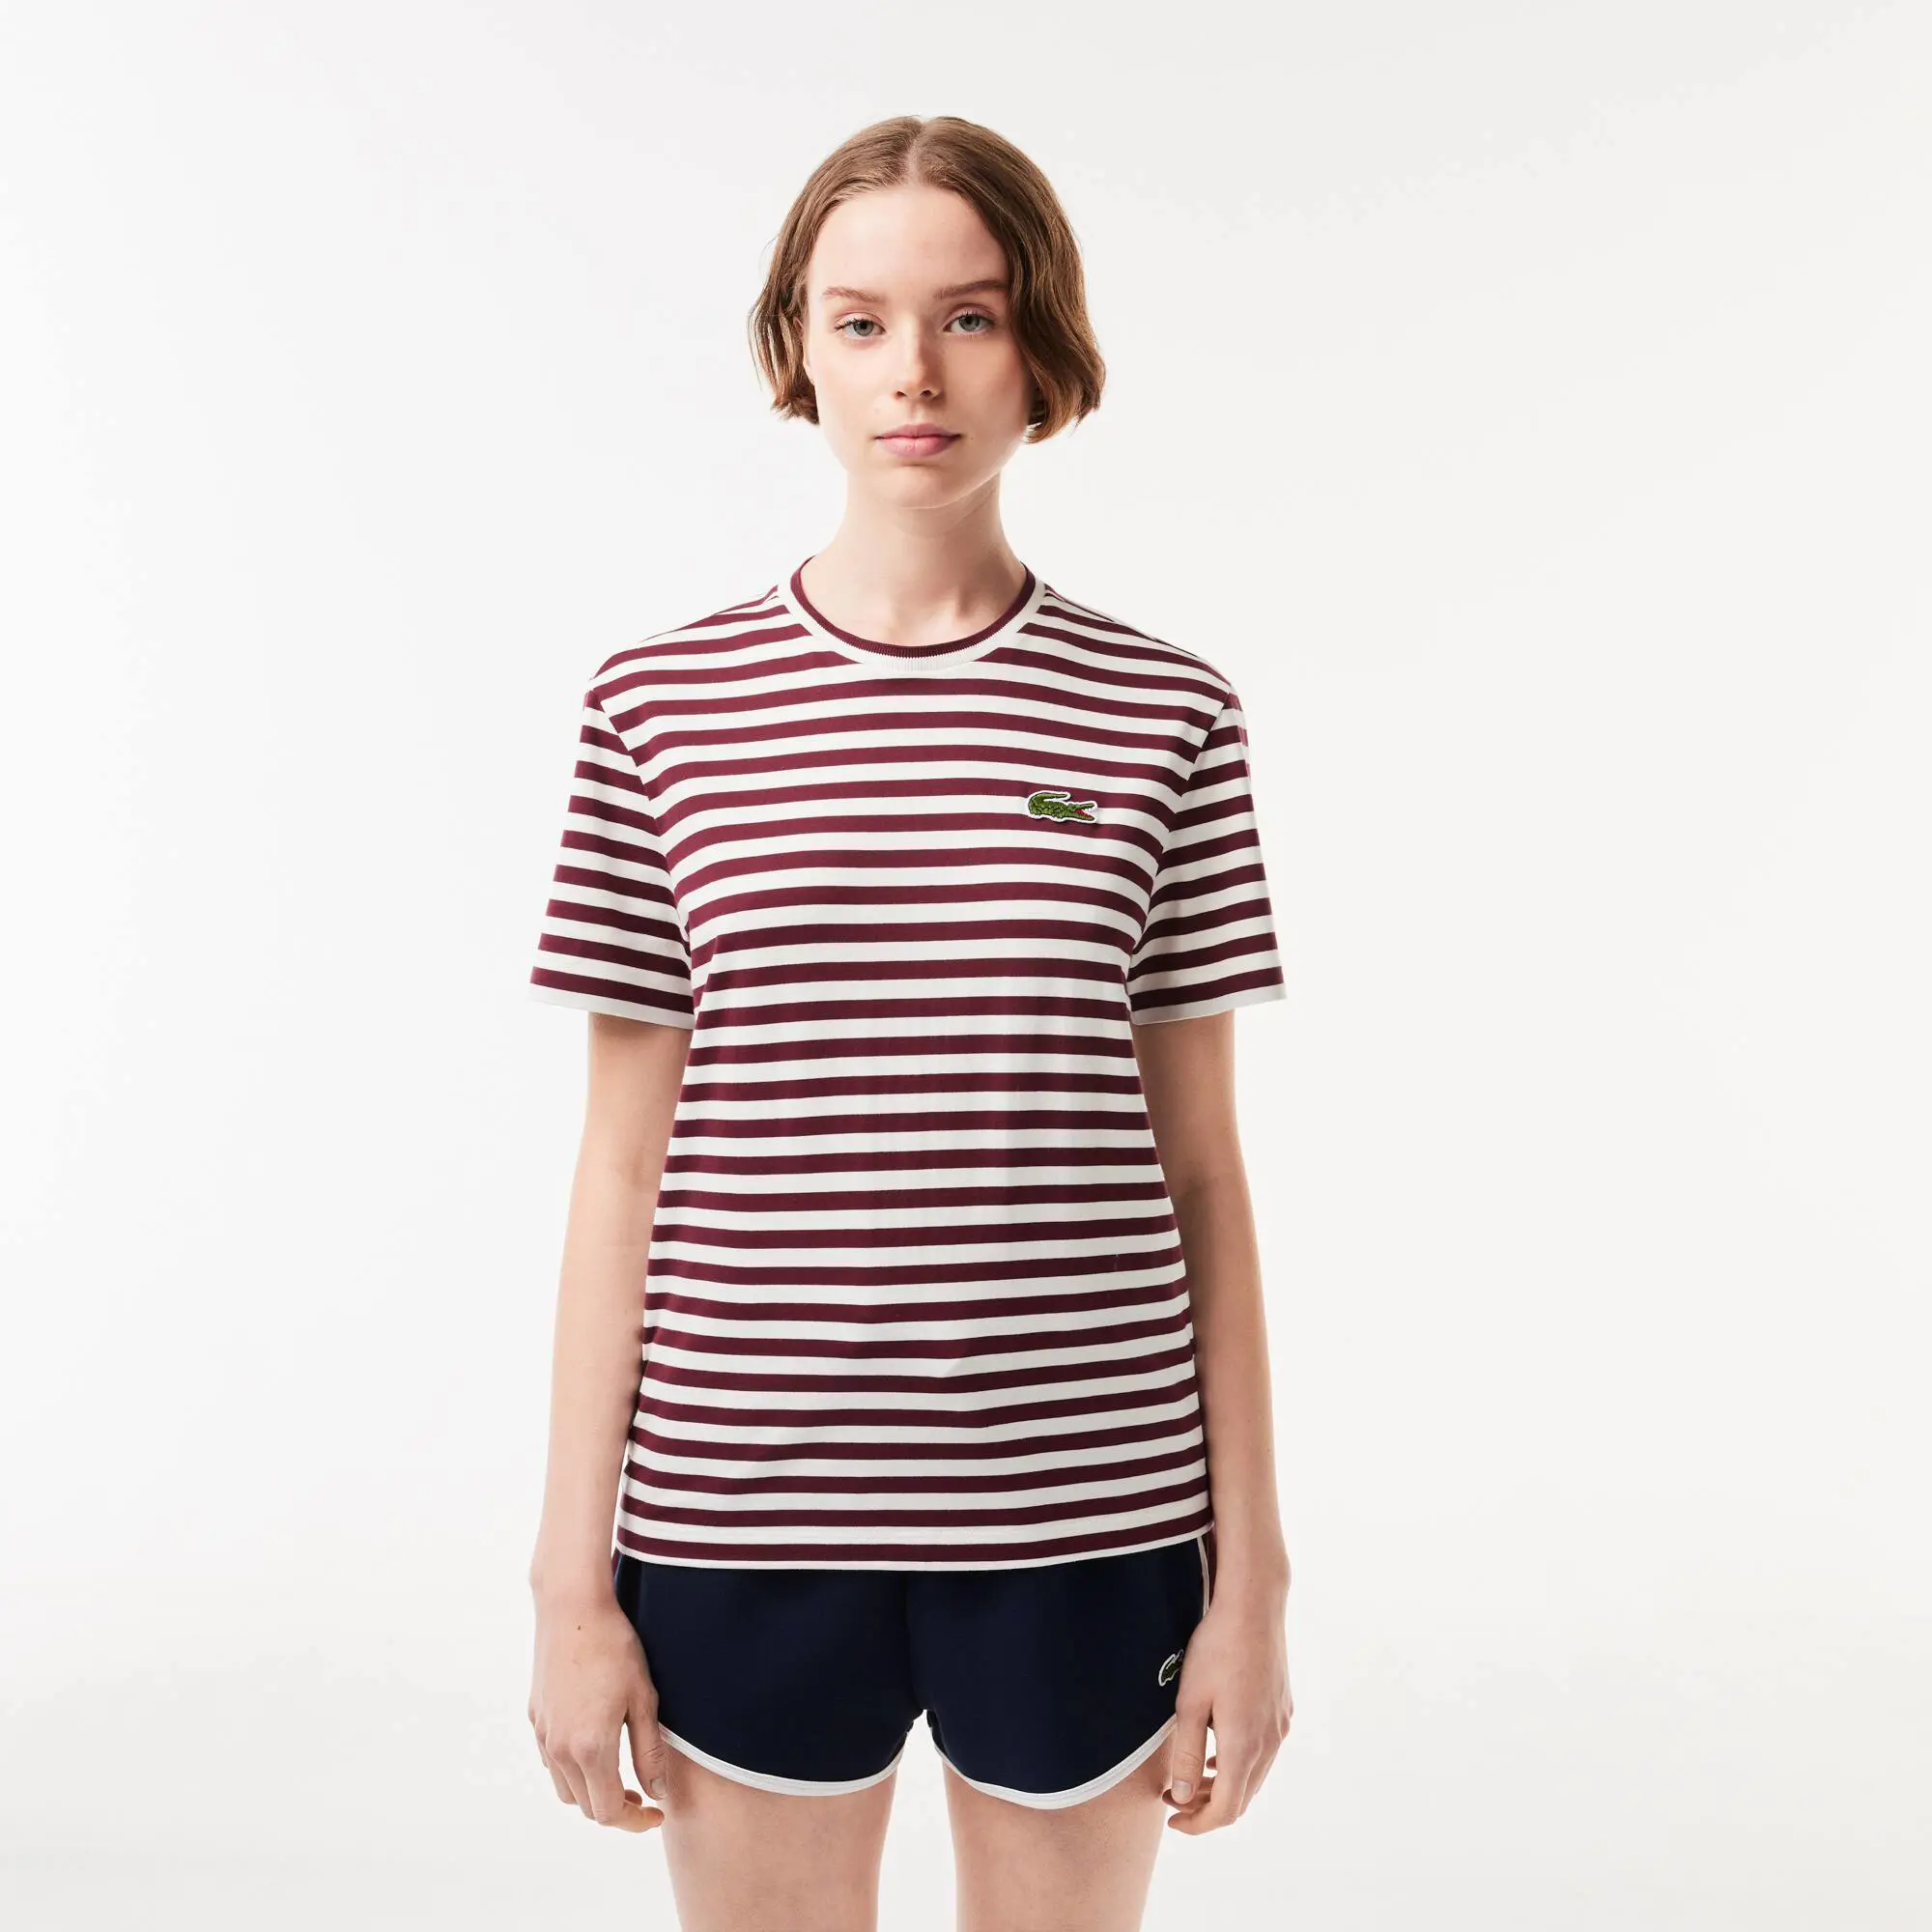 Lacoste Women's Lacoste Loose Fit Striped Cotton Jersey T-Shirt. 1